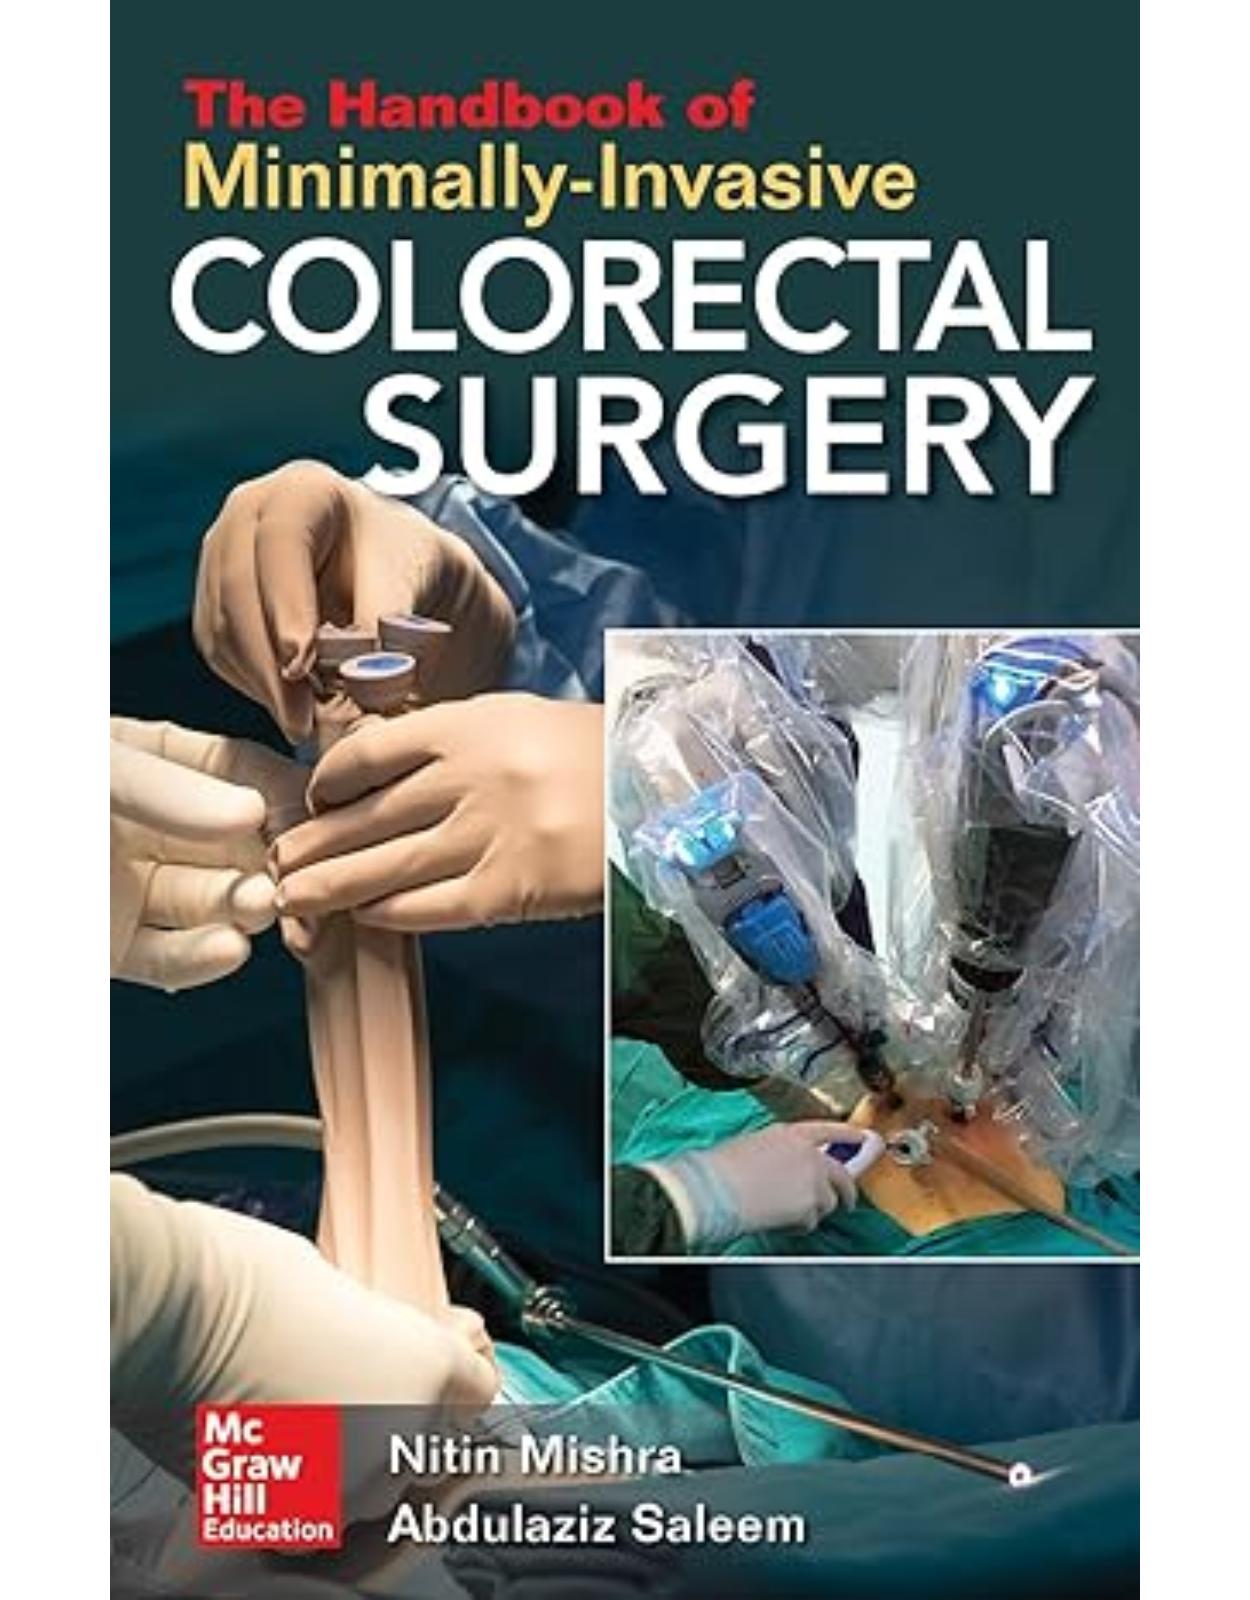 The Handbook of Minimally-Invasive Colorectal Surgery